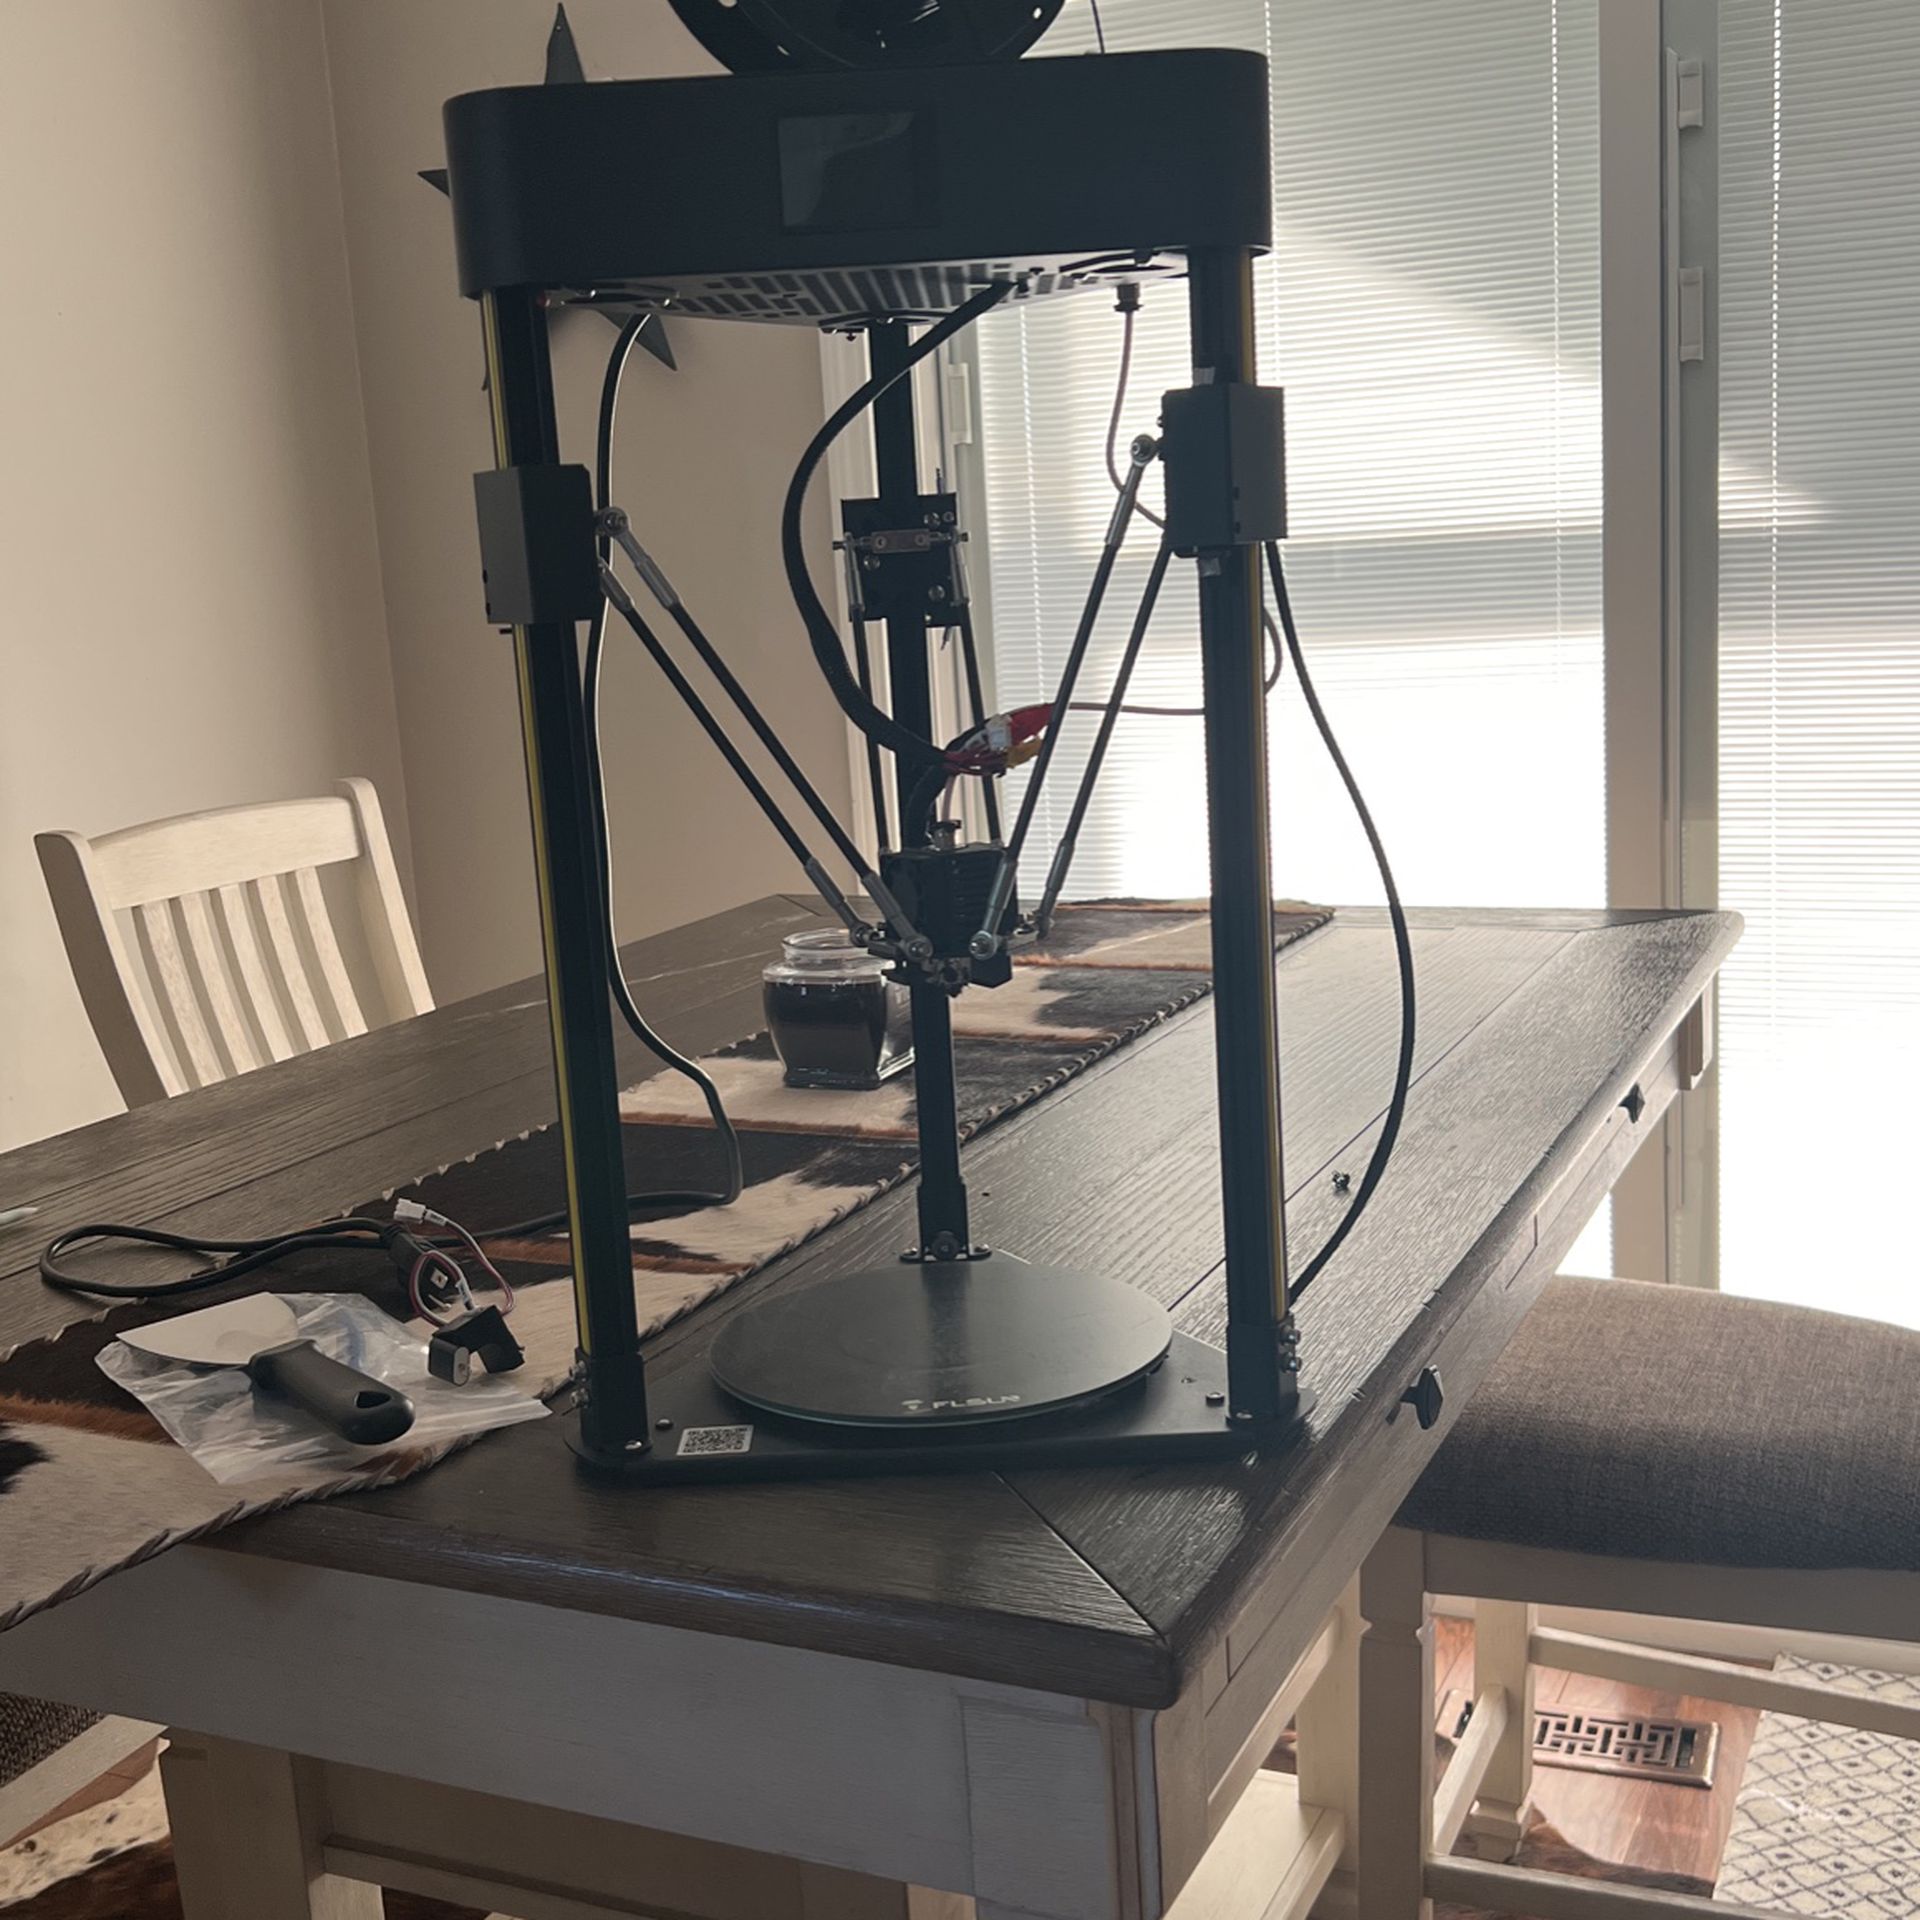 Flsun Q5 auto leveling 3D printer